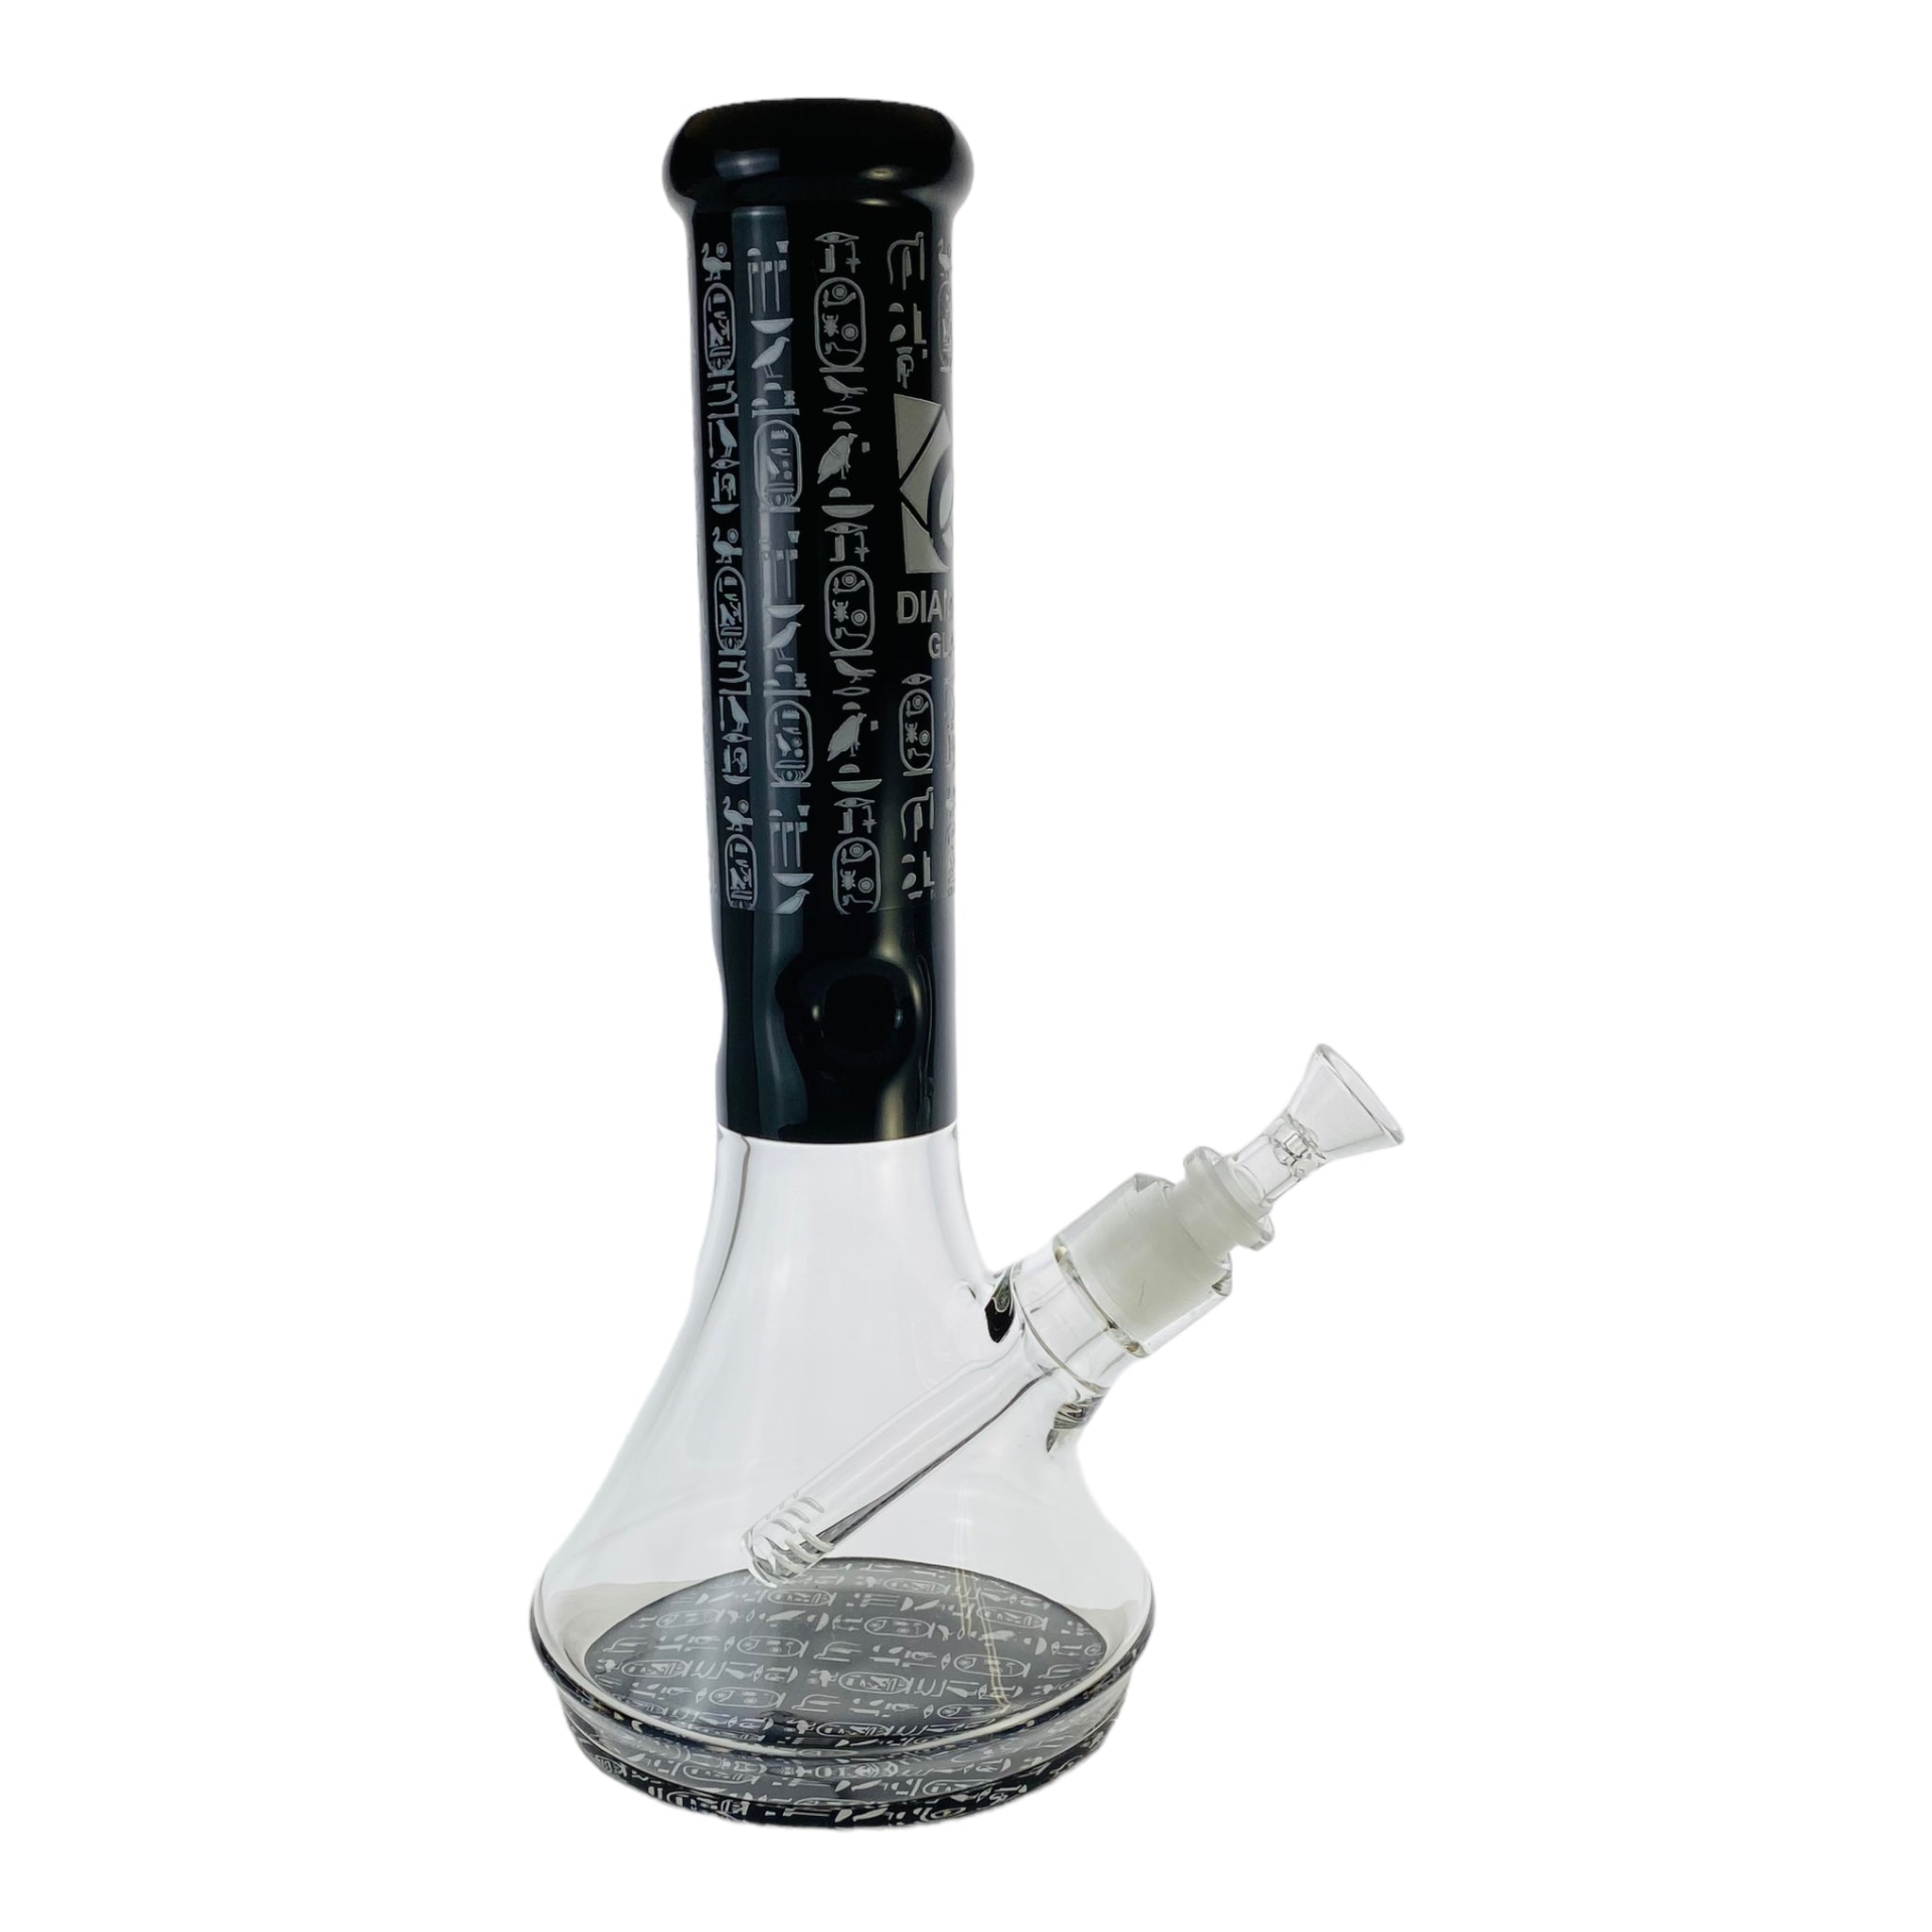 Diamond Glass - White And Black Beaker Bong With Hieroglyphics for sale mighty quinn best smokeshop santa rosa ca 